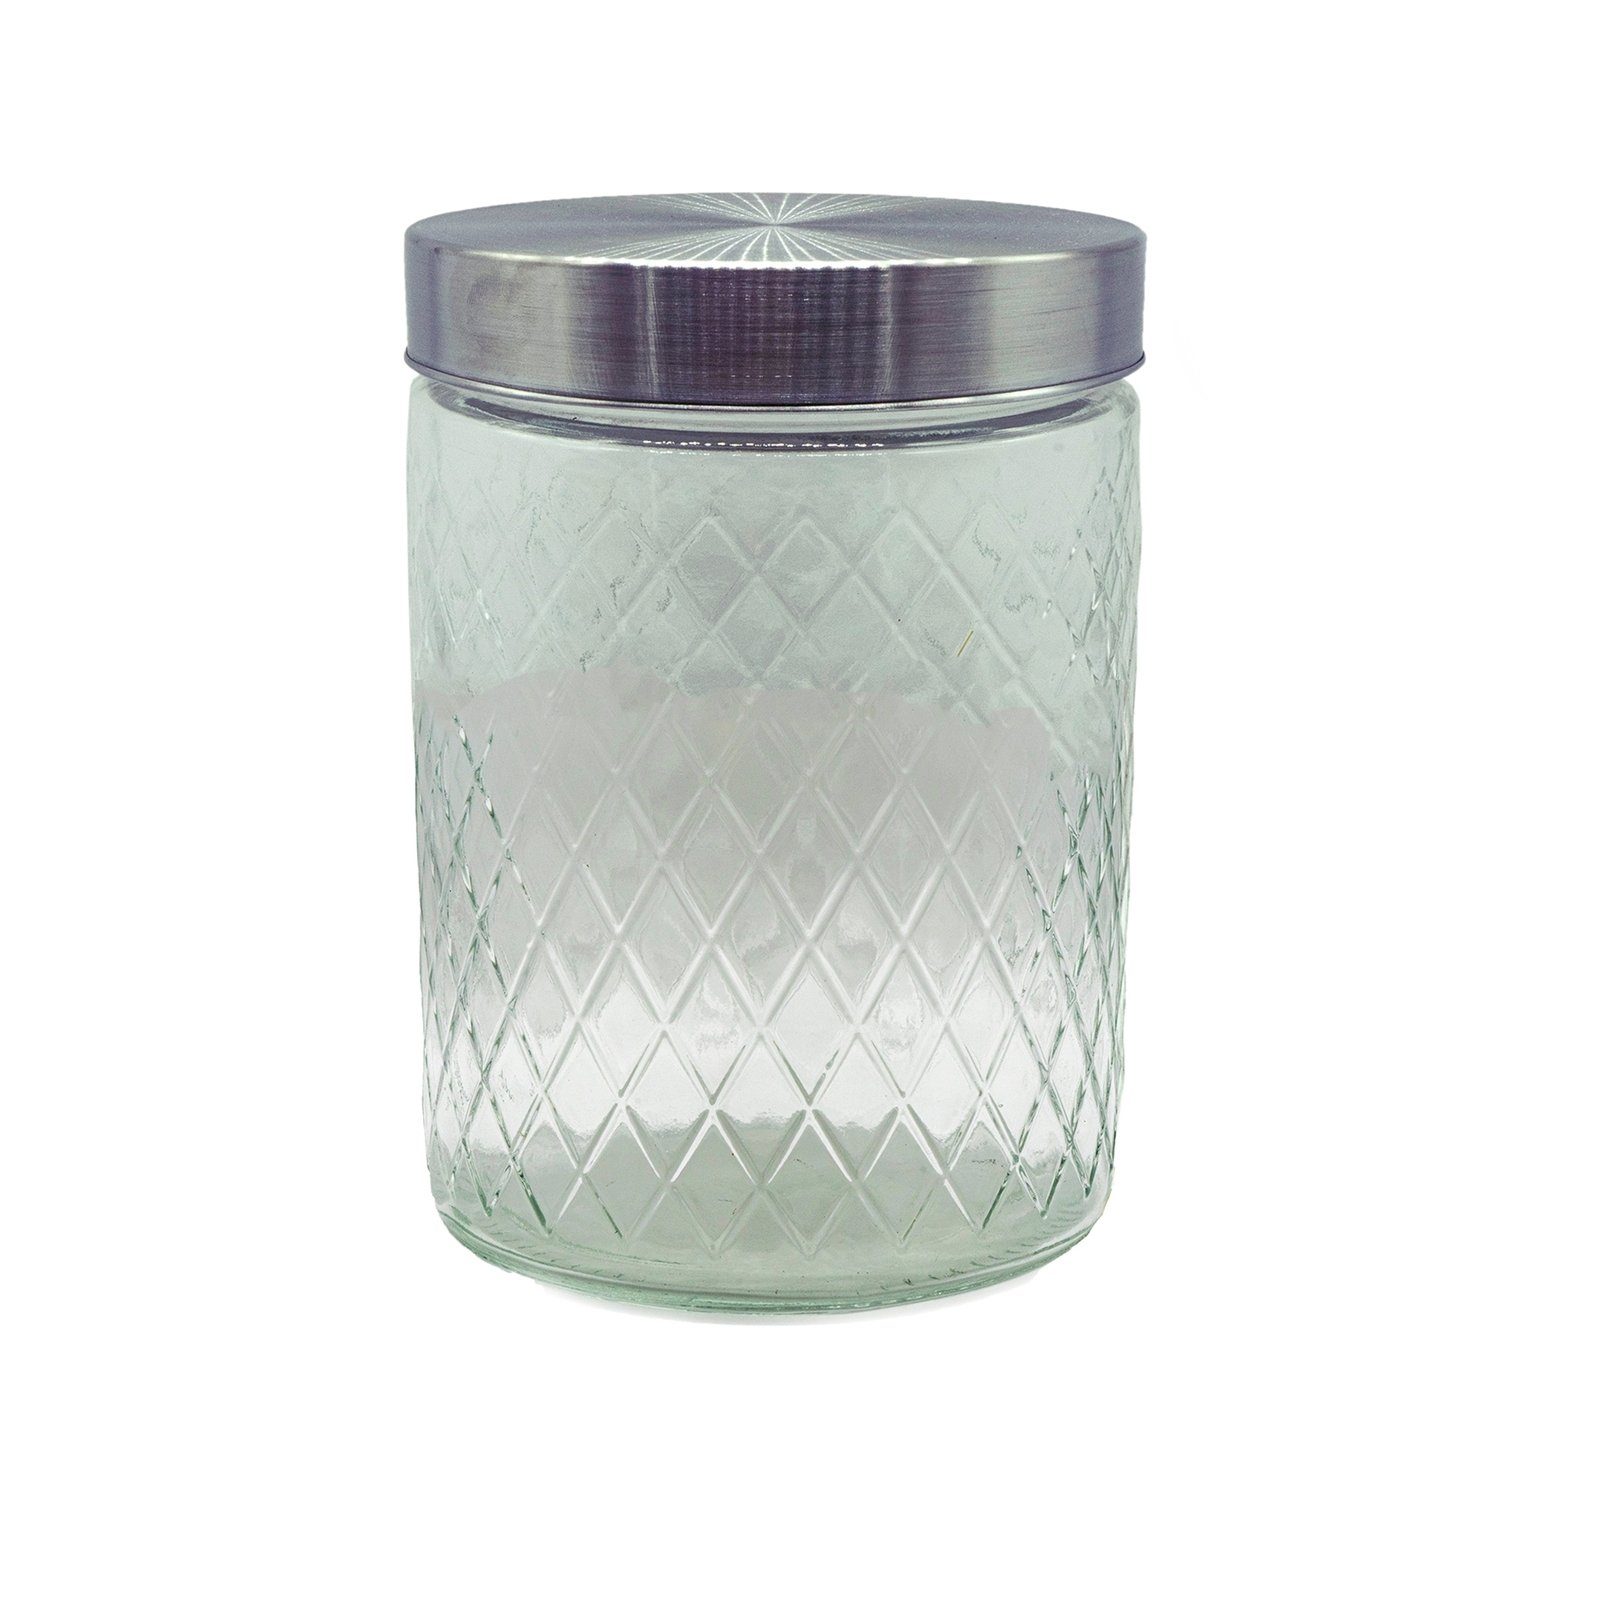 Vorratsglas Rautenprägung Glas, Edelstahl, mit Vorratsglas Neuetischkultur Edelstahldeckel Rauten-Prägung,